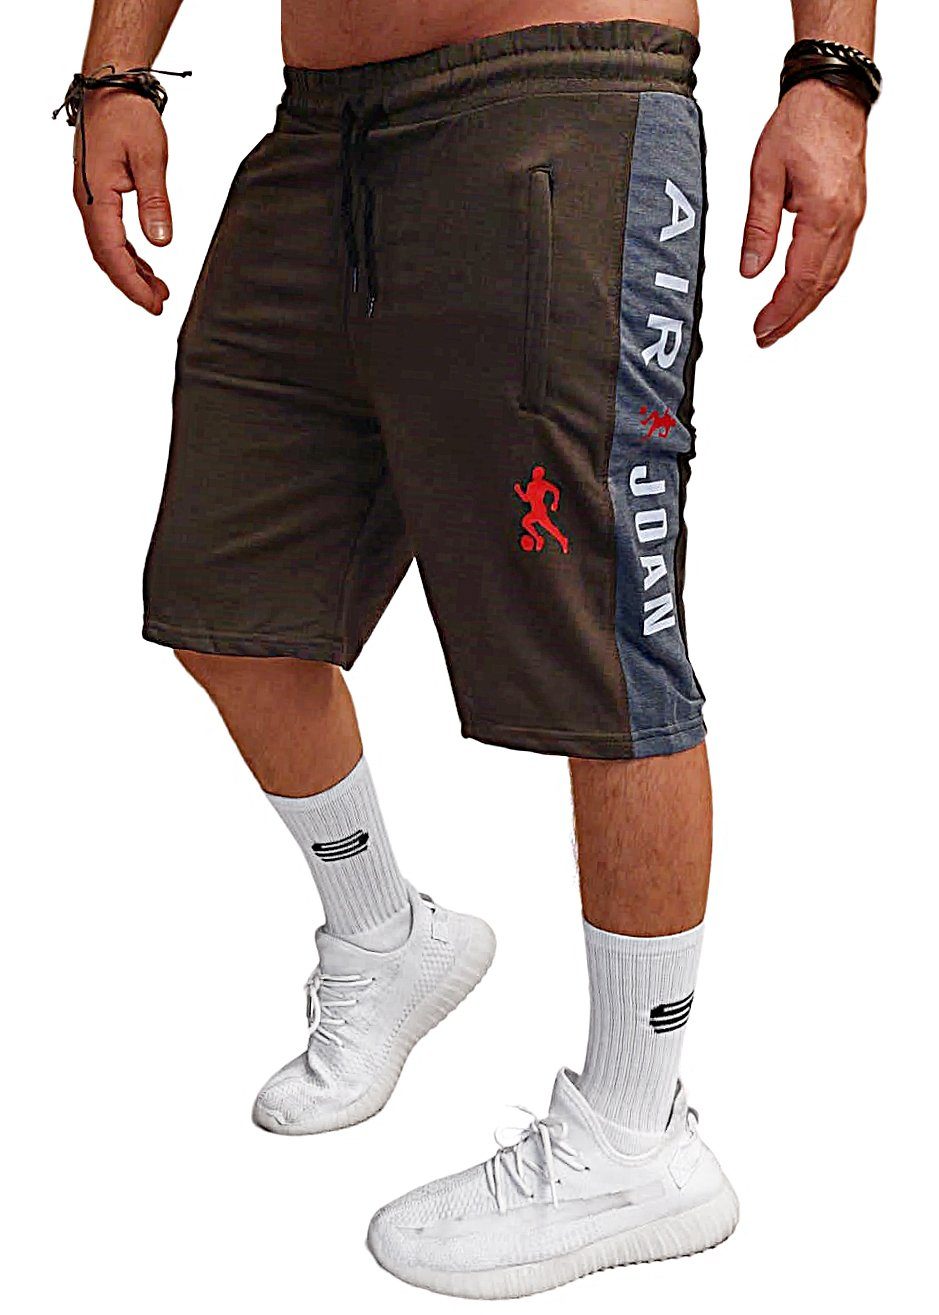 kurz Capri sport Herren Bermuda Sommer Shorts 3/4 RMK shorts uni (1006) Short tarn Fitness Hose Khaki